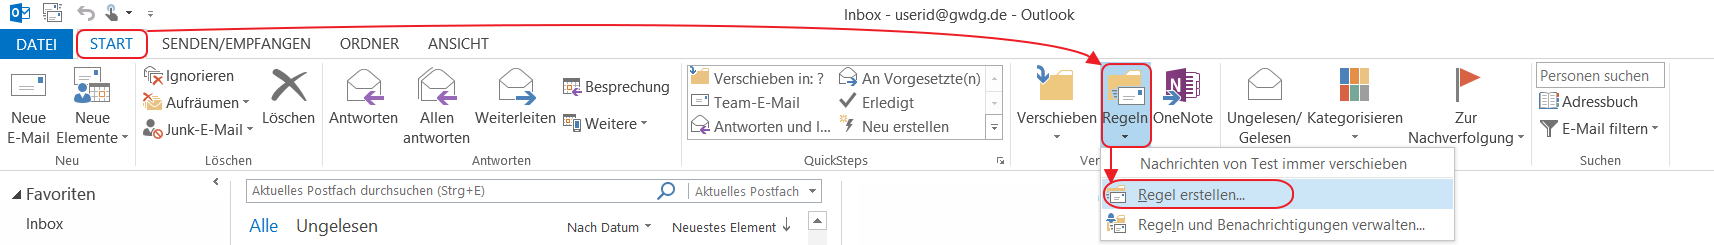 de:services:email_collaboration:email_service:1windows:outlook_config:outlook2013_regel-erstellen_startmenue.png